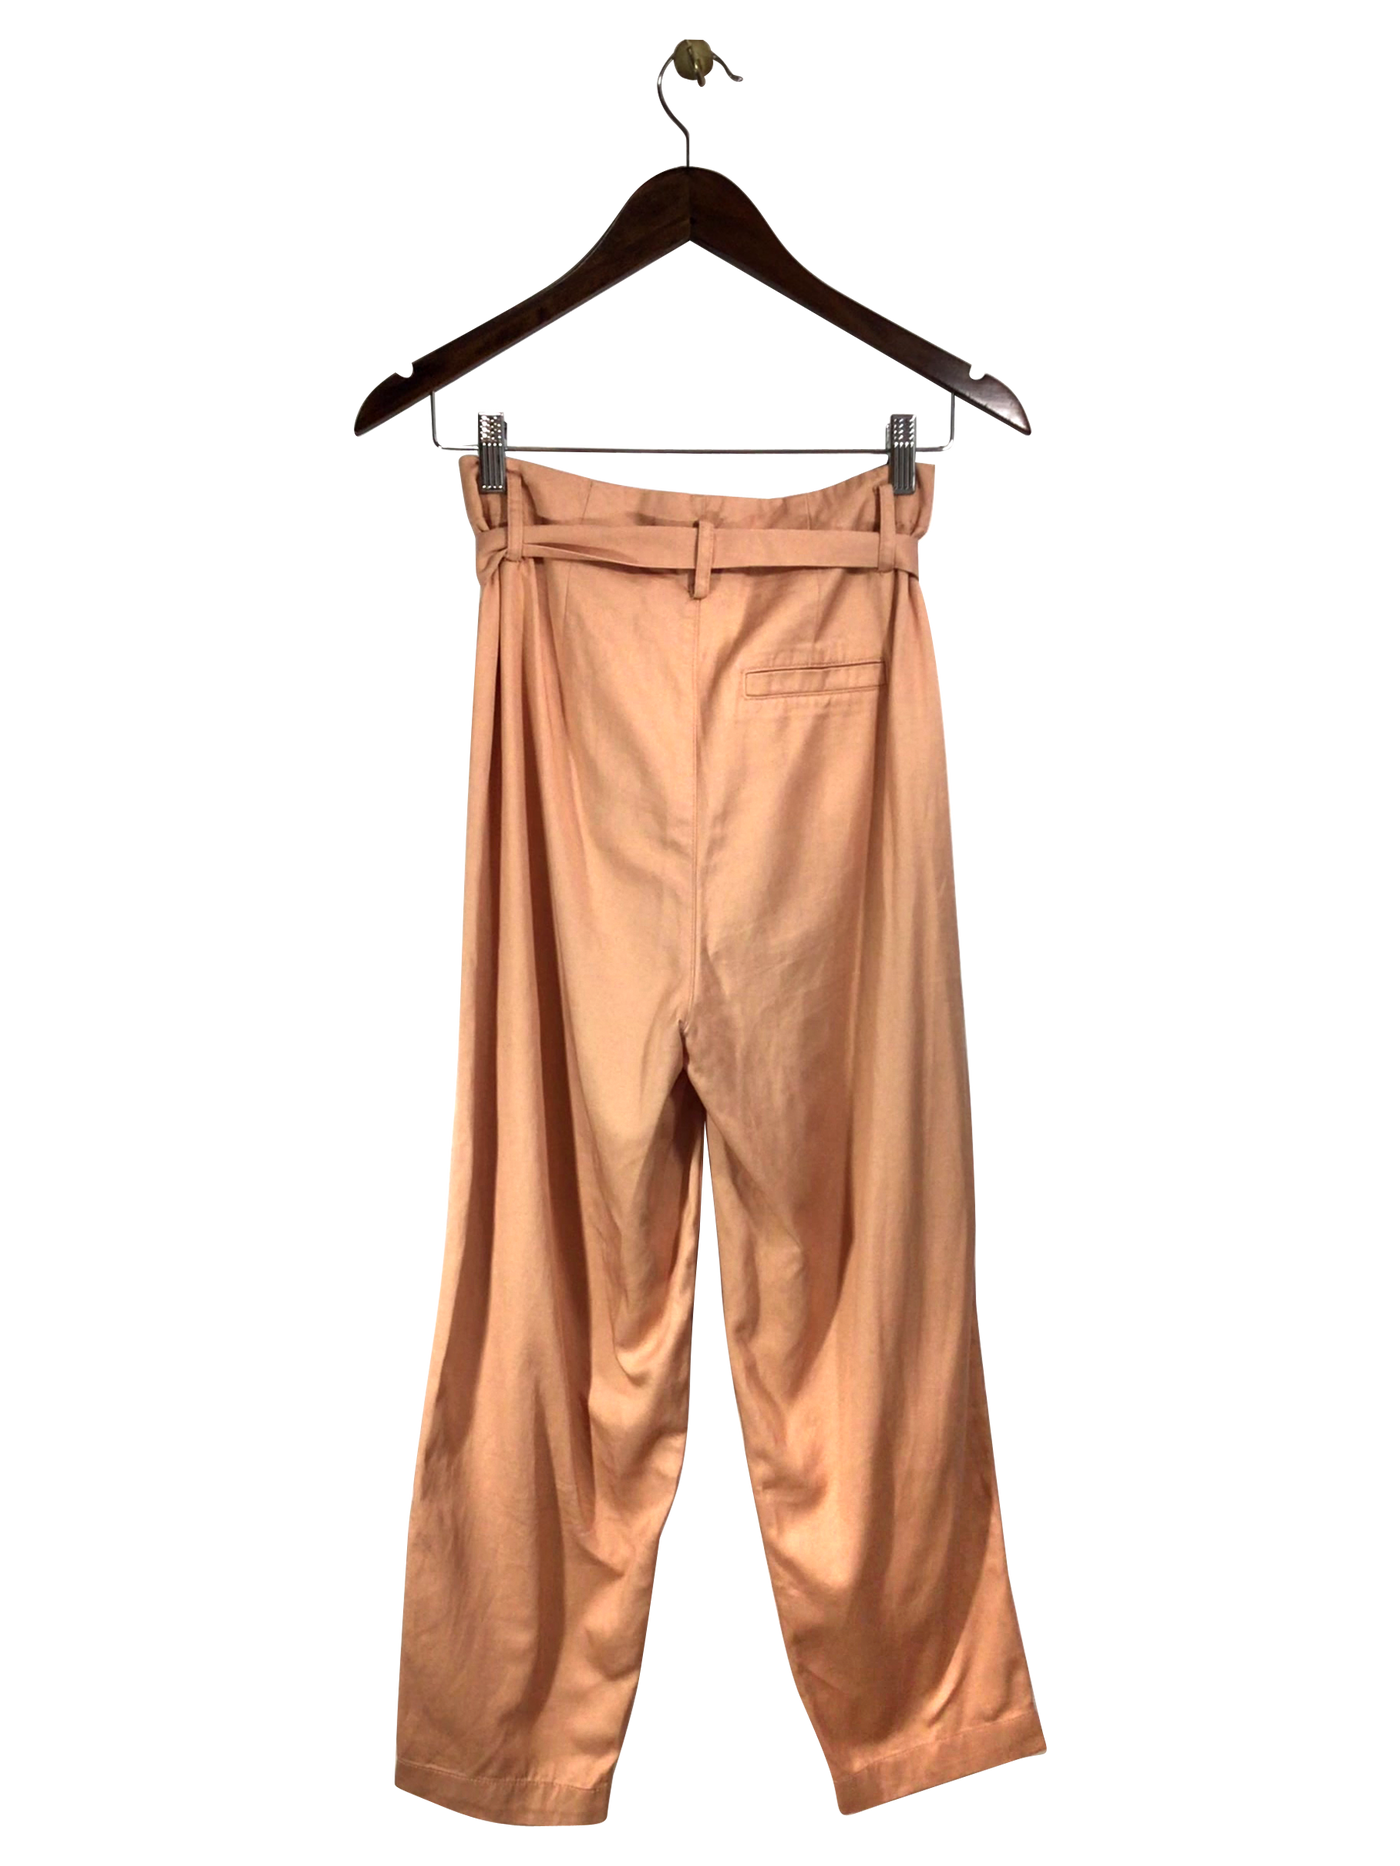 FRANK & OAK Pant Regular fit in Pink - Size 0 | 11.04 $ KOOP